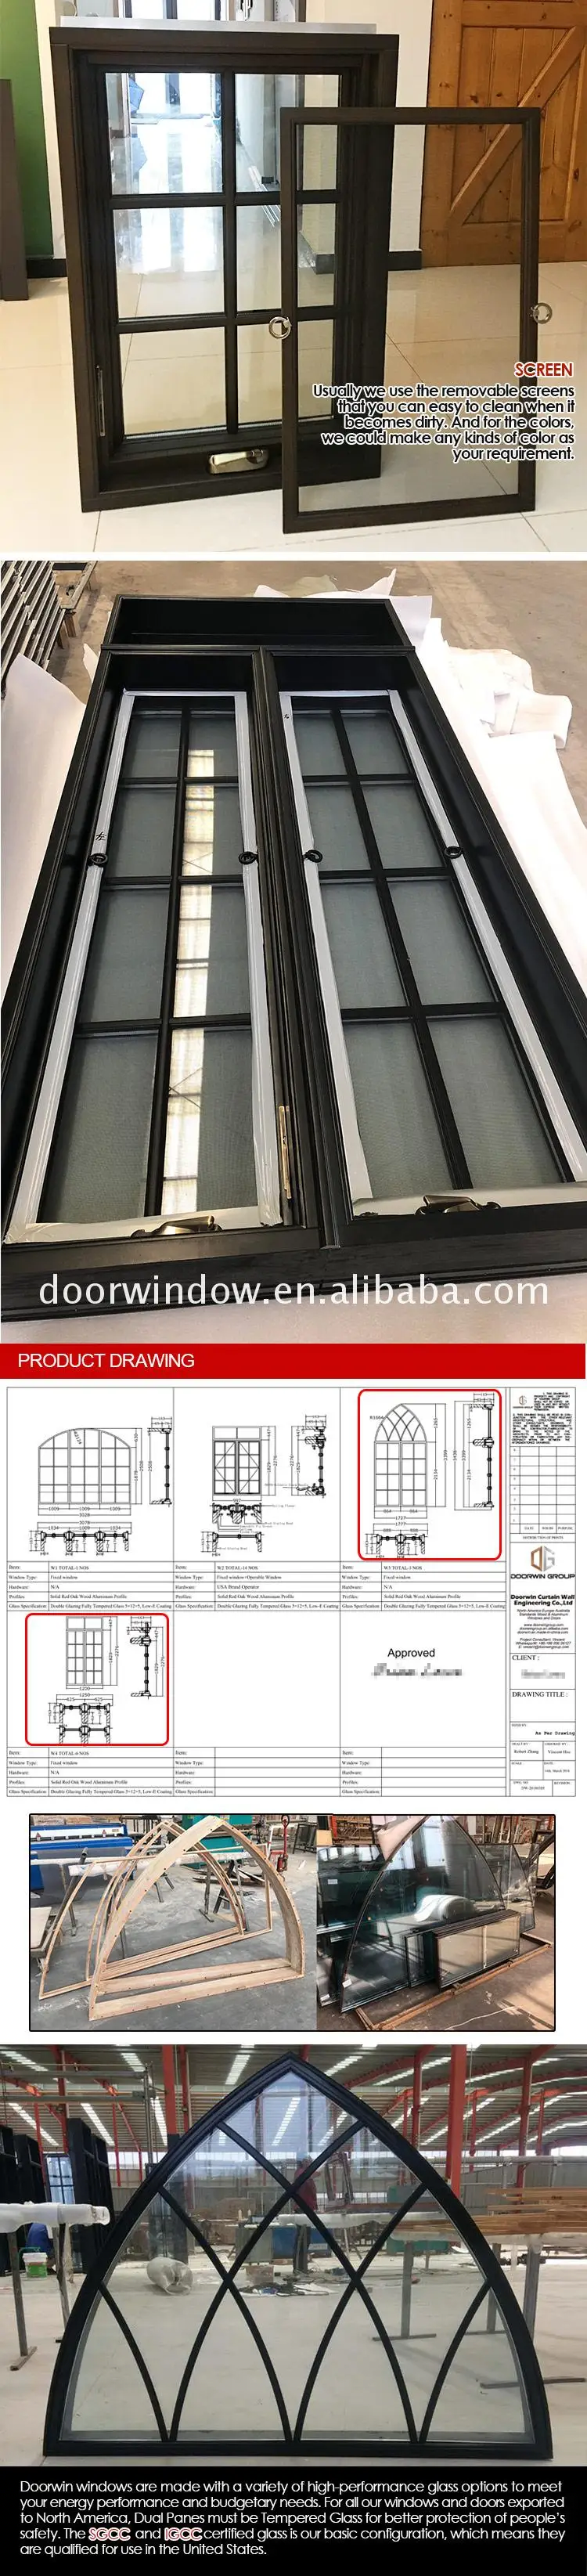 Aluminum wood double casement window windows coated wooden